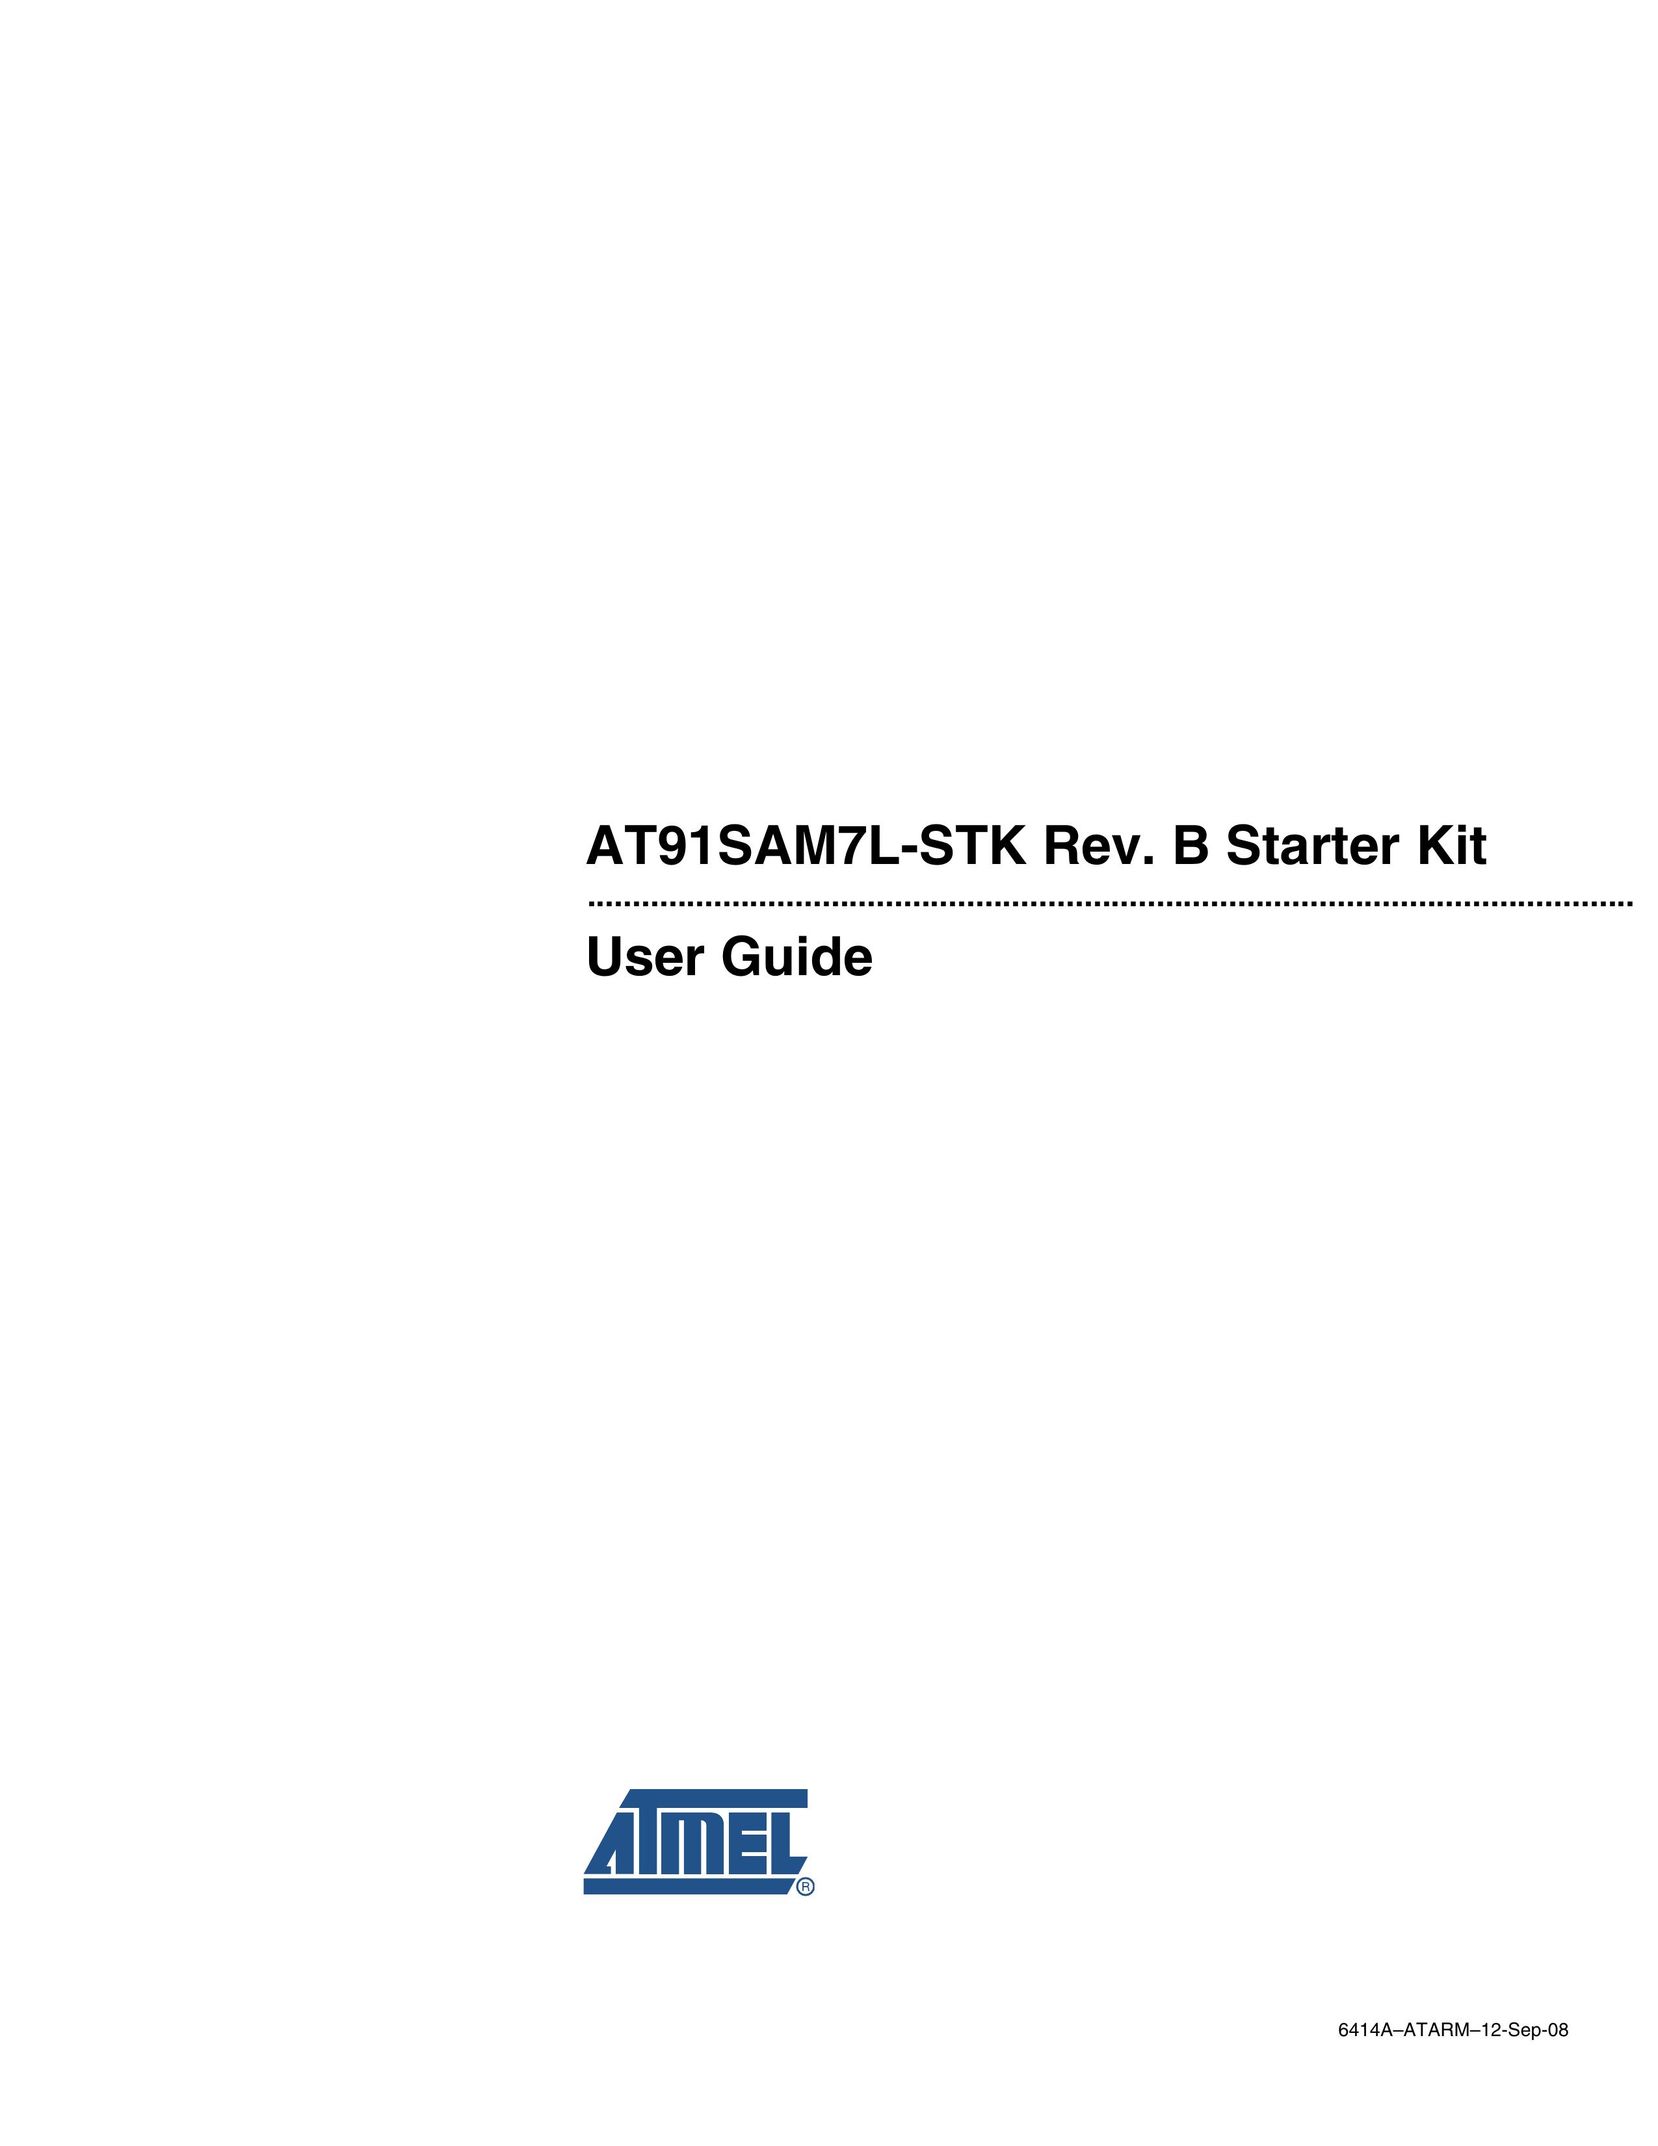 Atmel AT91SAM7L-STK Computer Hardware User Manual